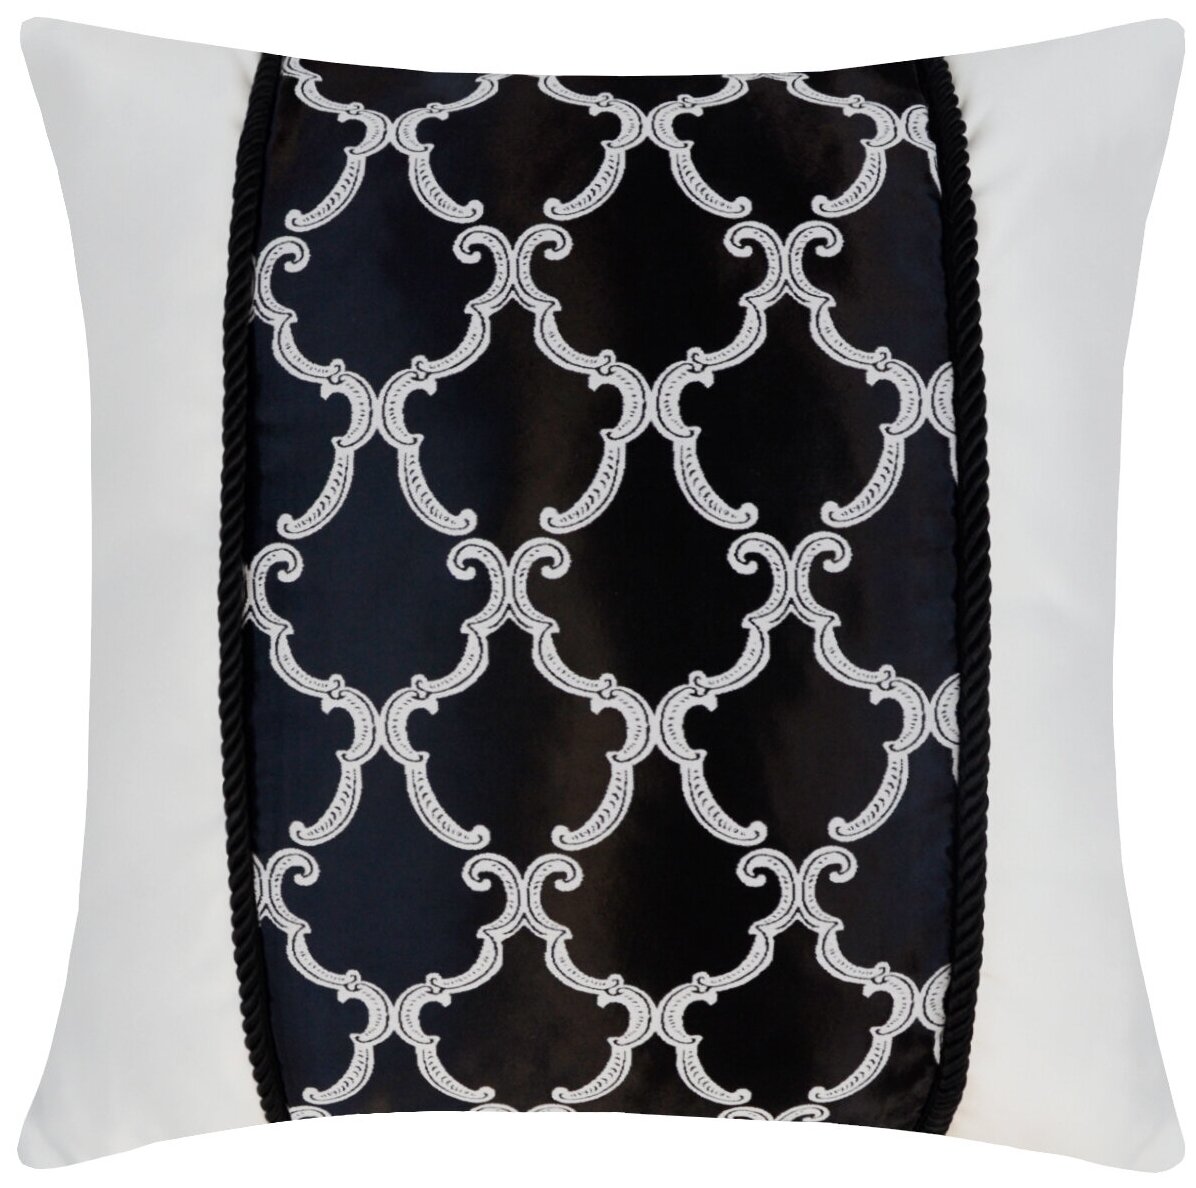 Наволочка - чехол для декоративной подушки на молнии T&I Анкара 45 х 45 см, белый, черный